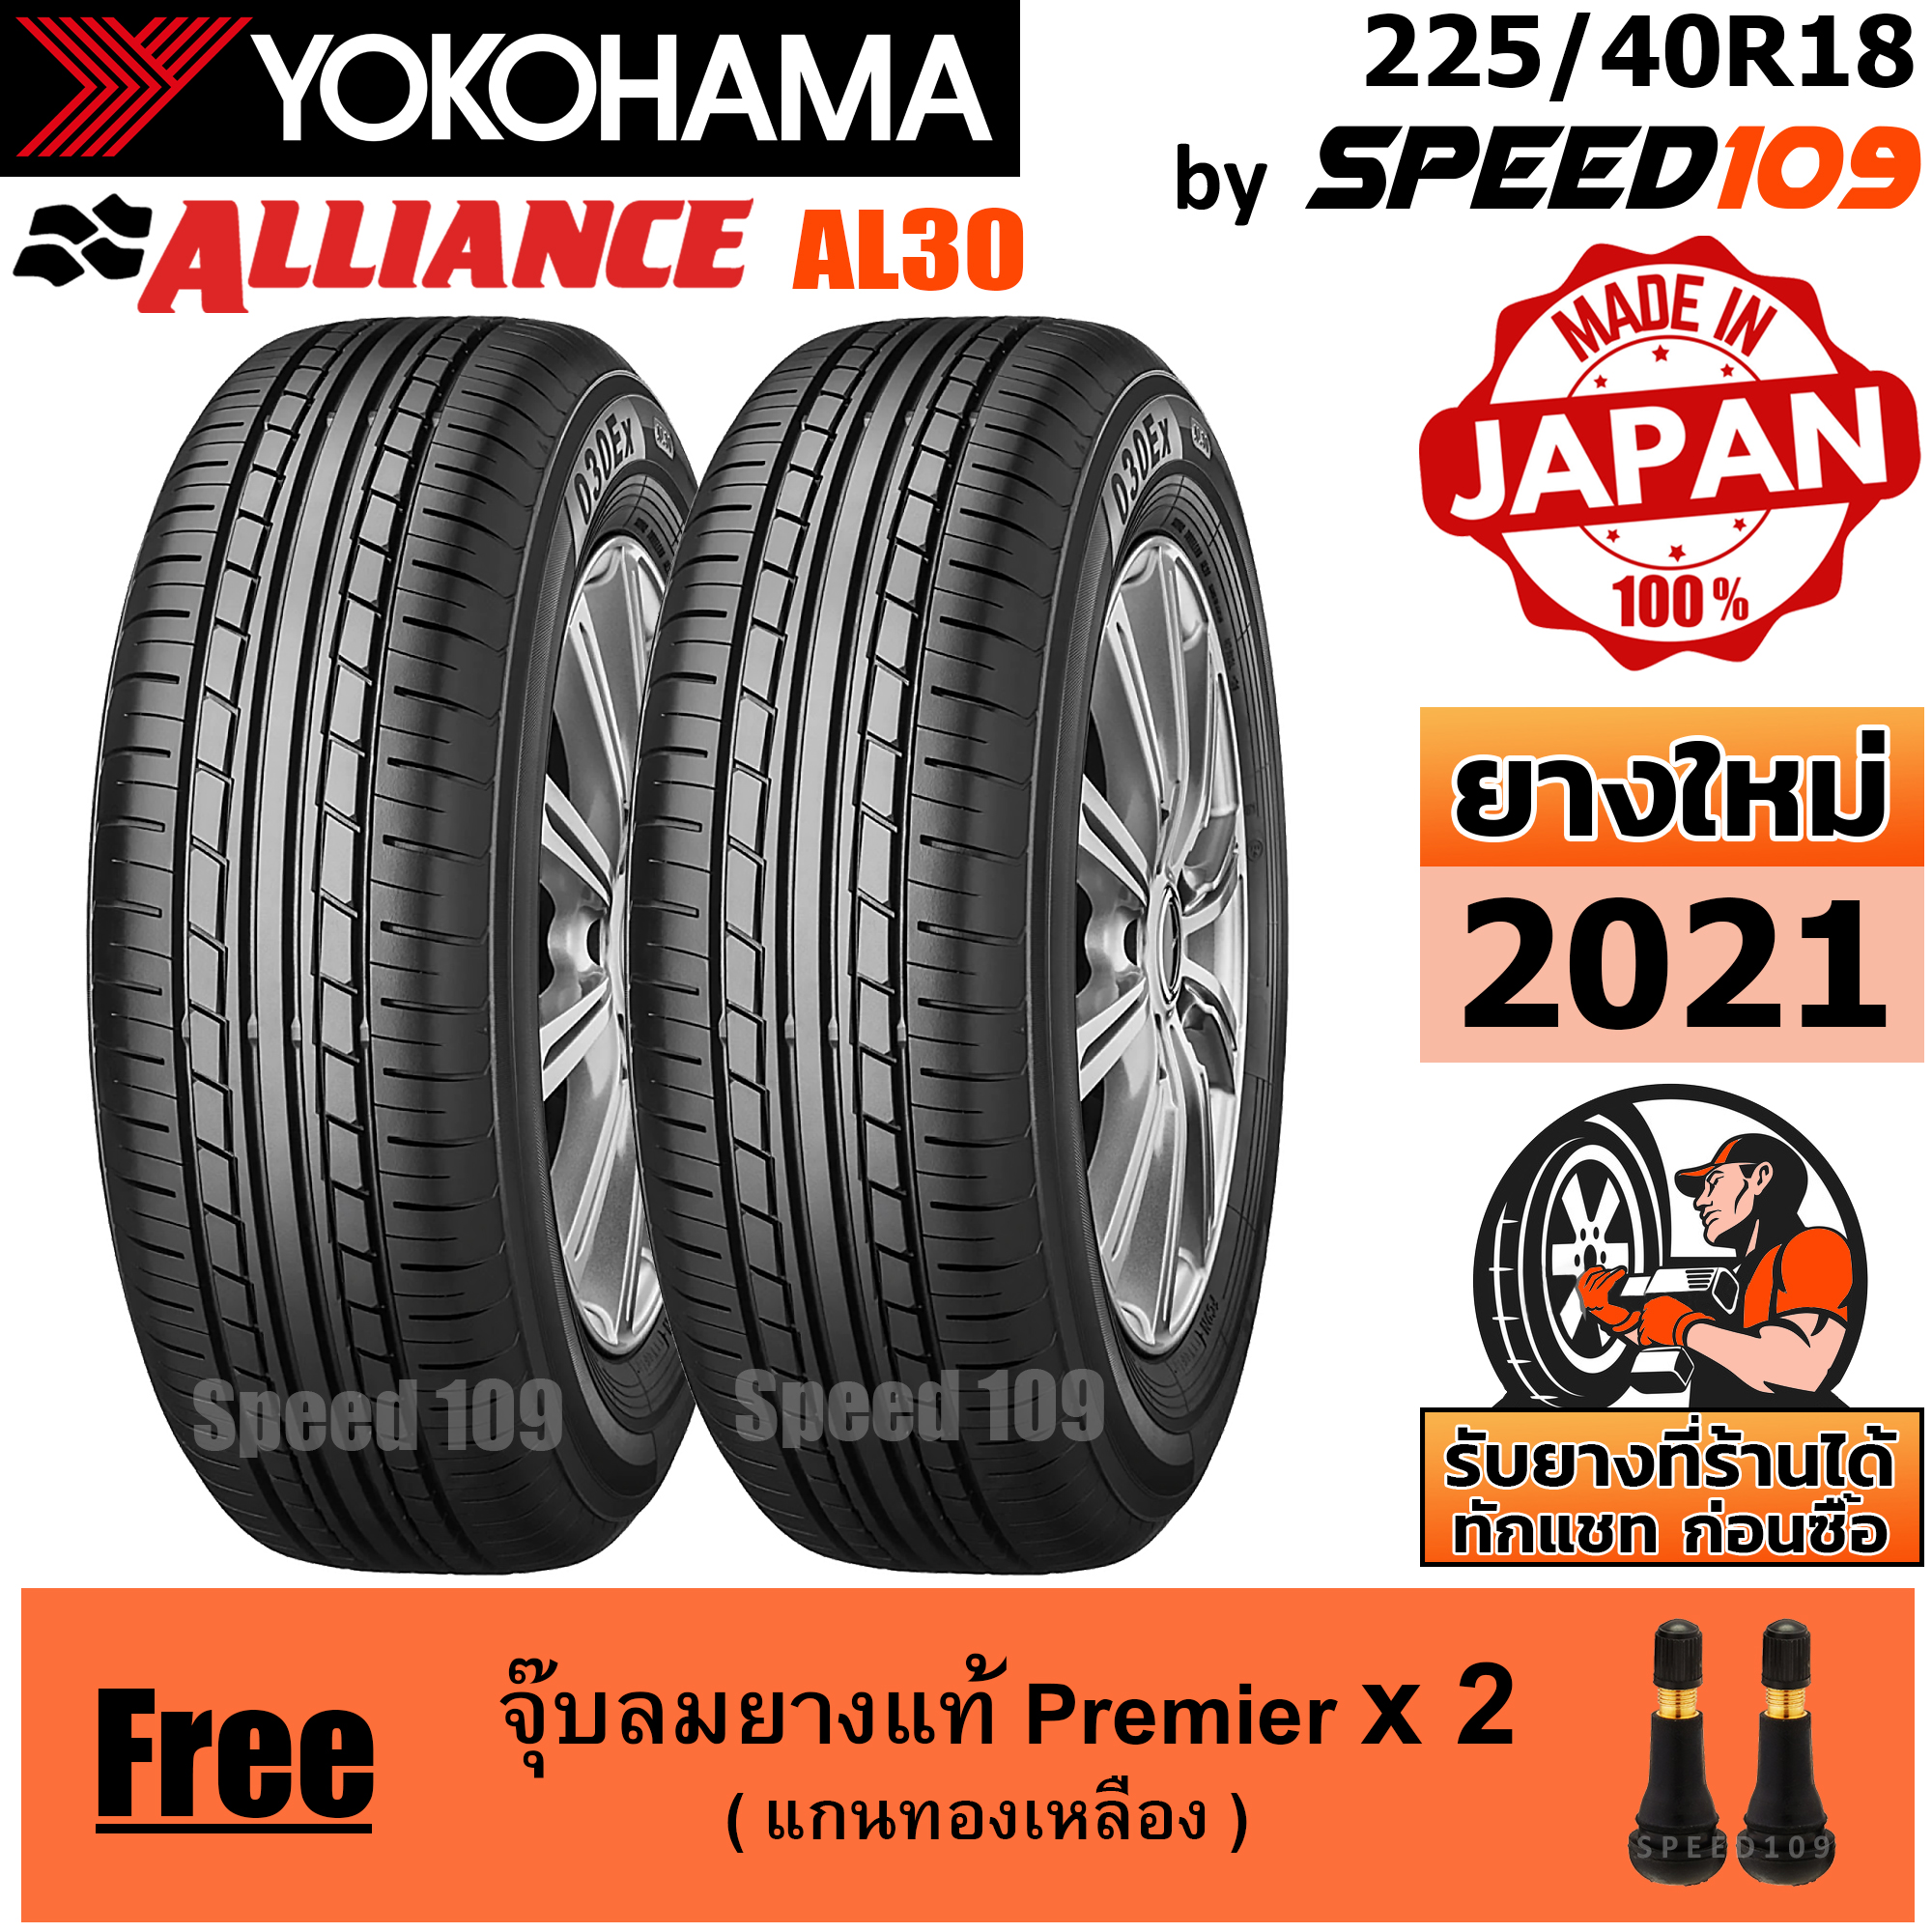 ALLIANCE by YOKOHAMA ยางรถยนต์ ขอบ 18 ขนาด 225/40R18 รุ่น AL30 - 2 เส้น (ปี 2021)